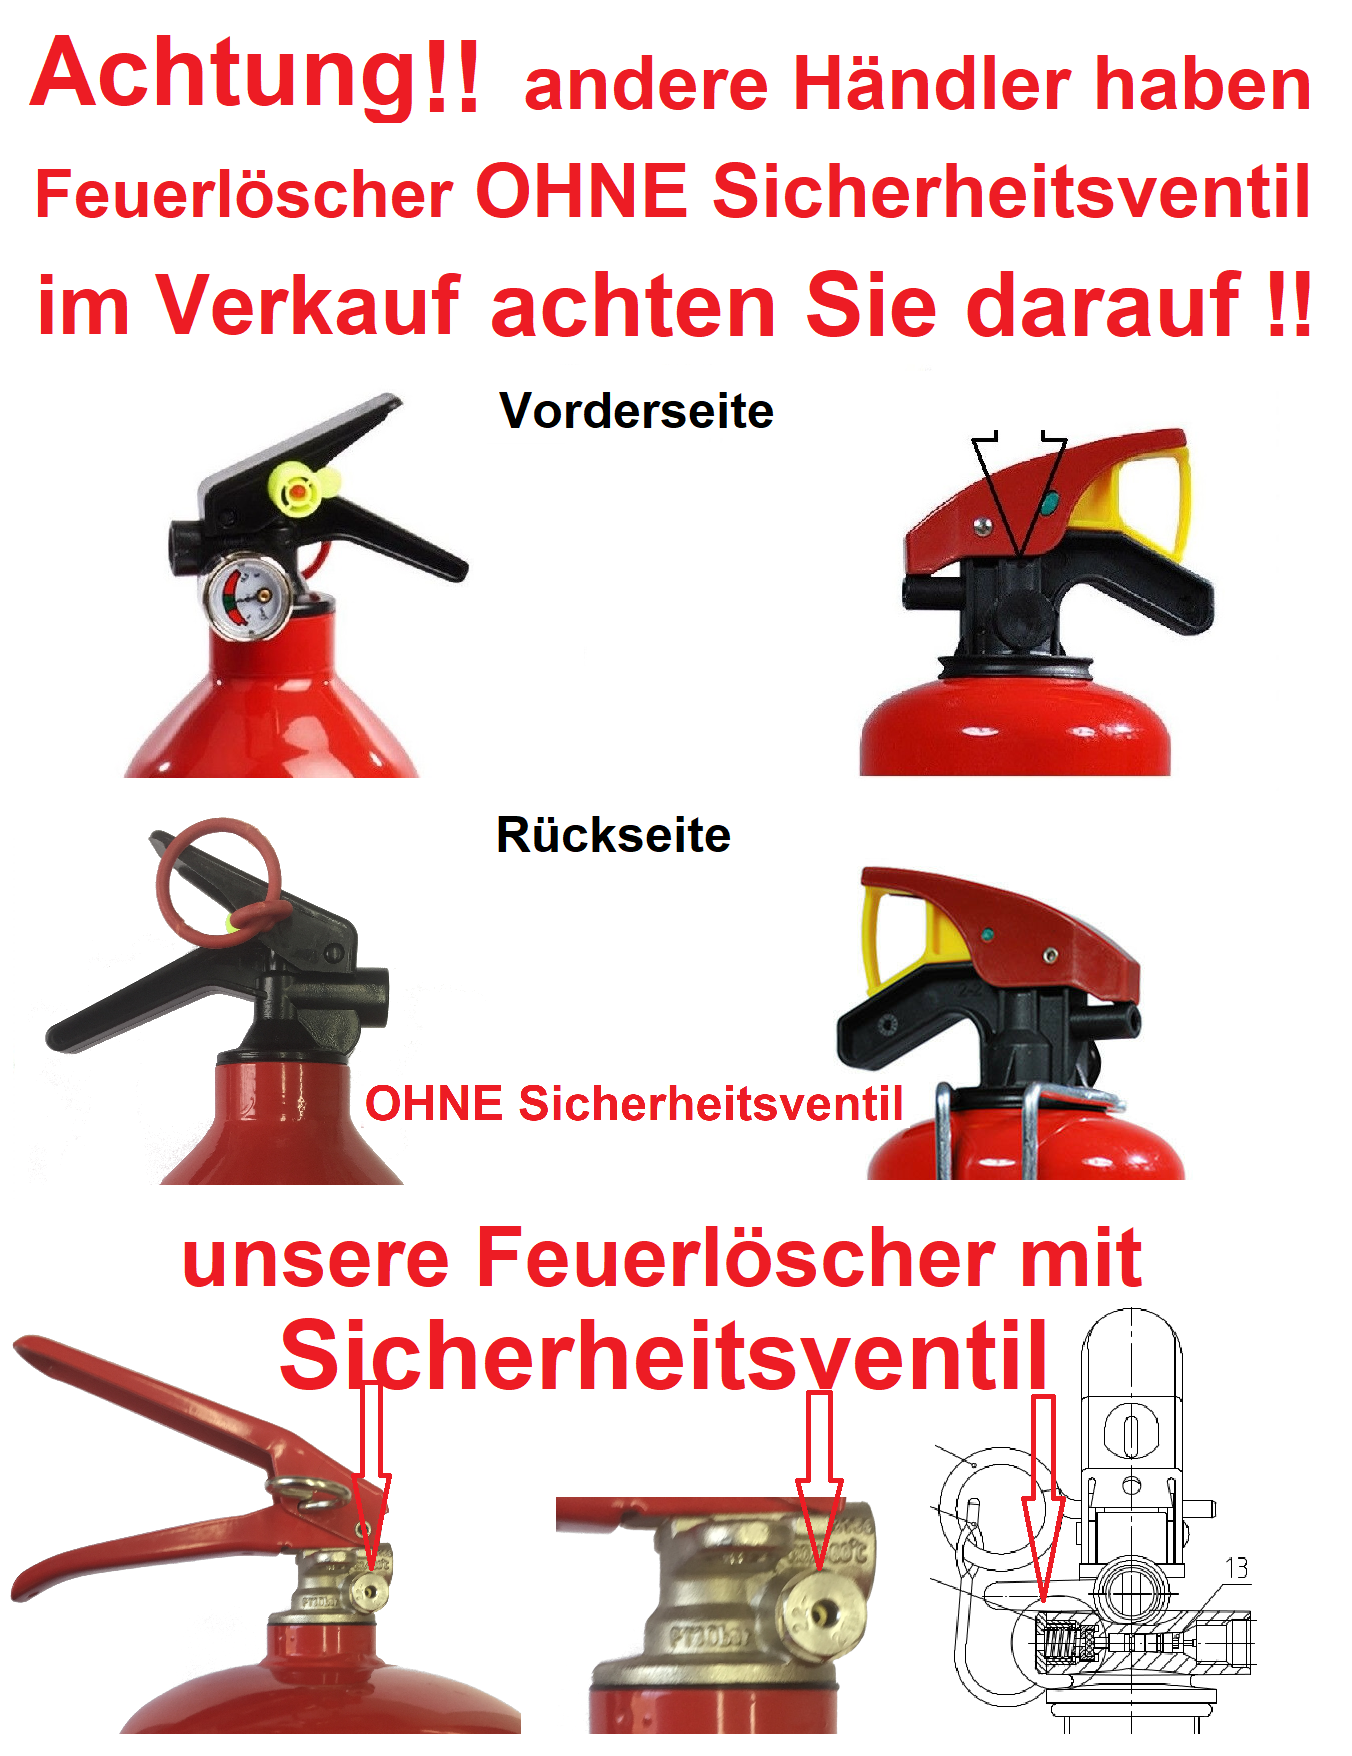 Feuerlöscher ABC, 1 kg, Pulver, Aluzyl, TÜV GS, CE, PED, MED